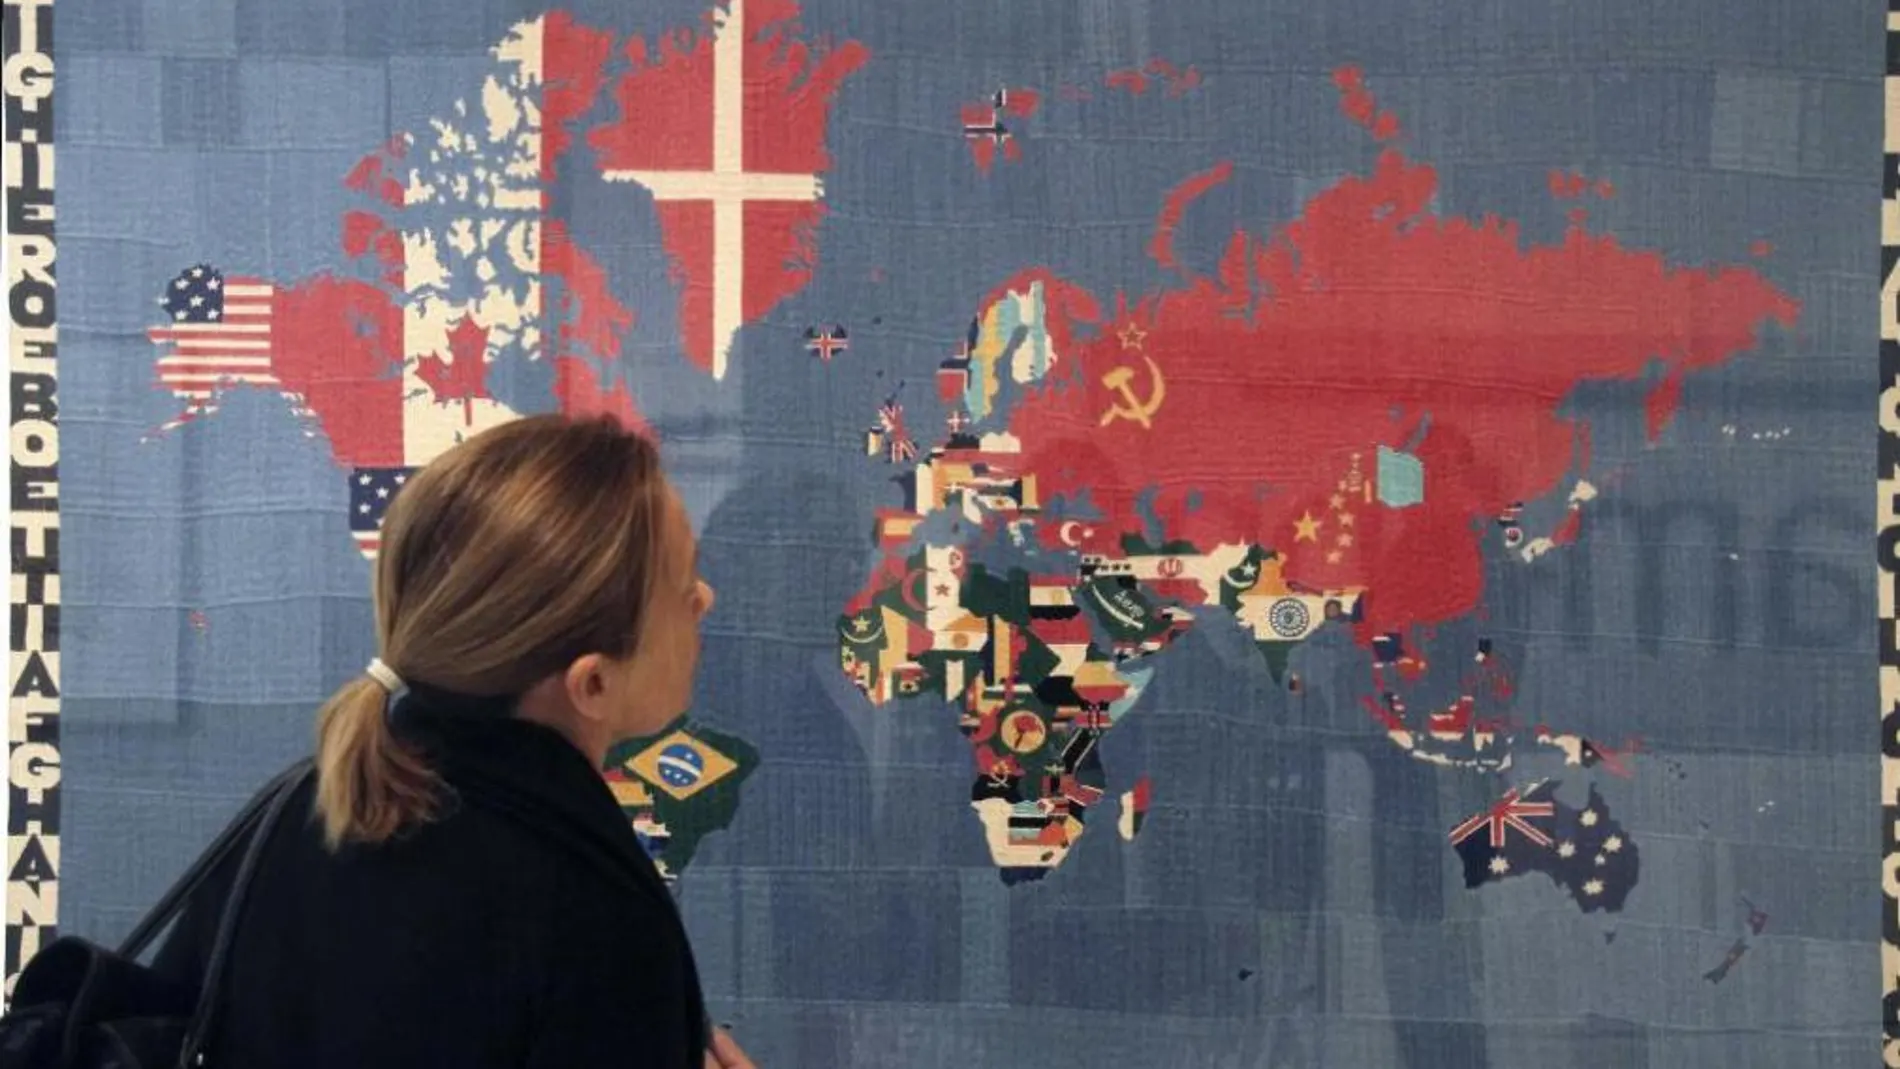 Una mujer observa la obra "Mapa -Traer al mundo el mundo"(1984), de Alighiero Boetti